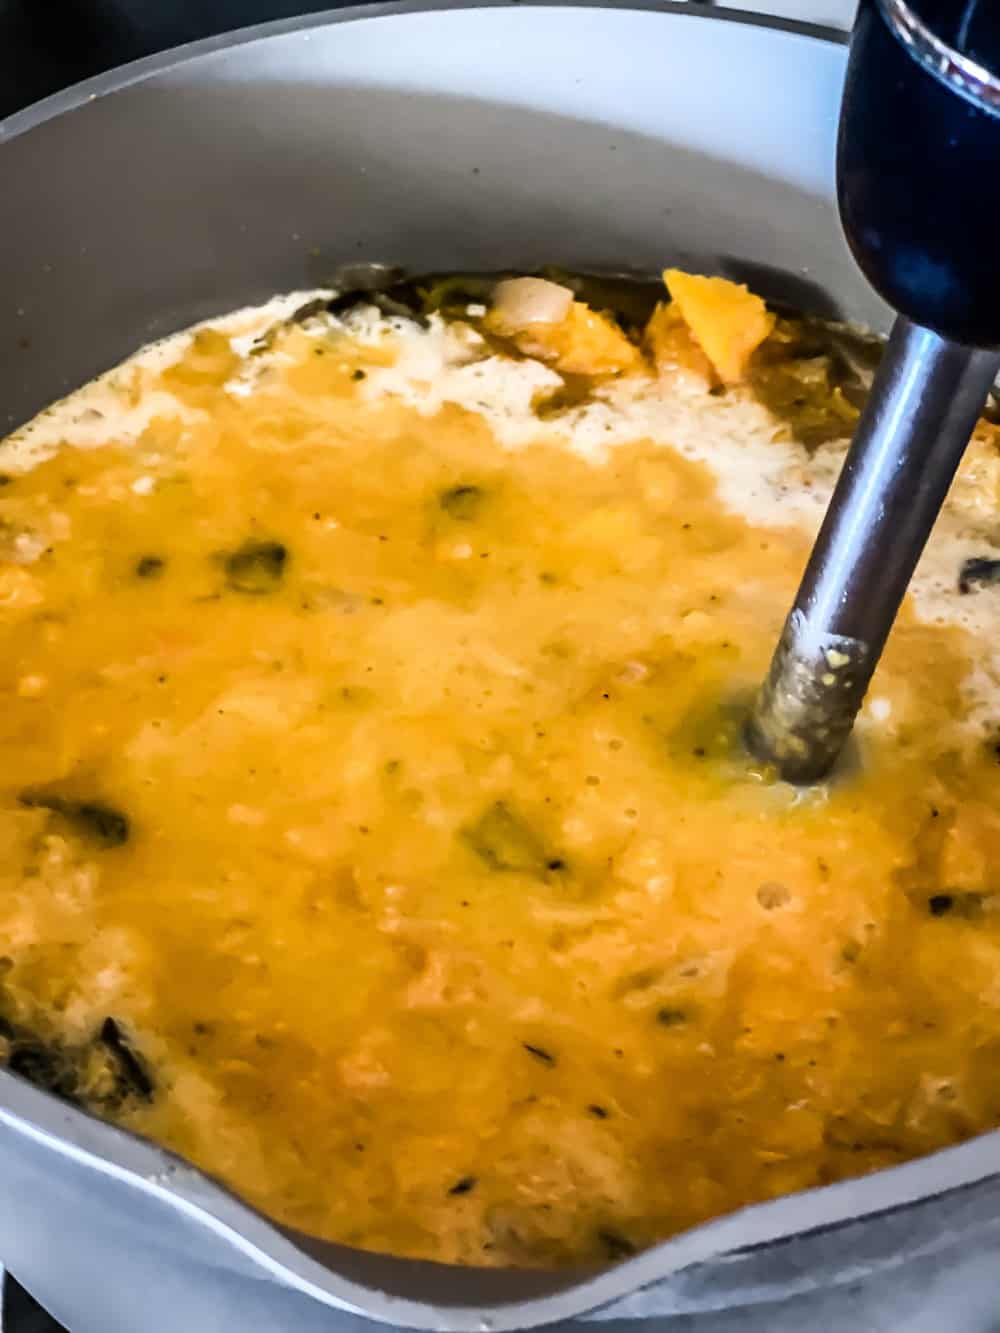 blending butternut squash soup with immersion blender